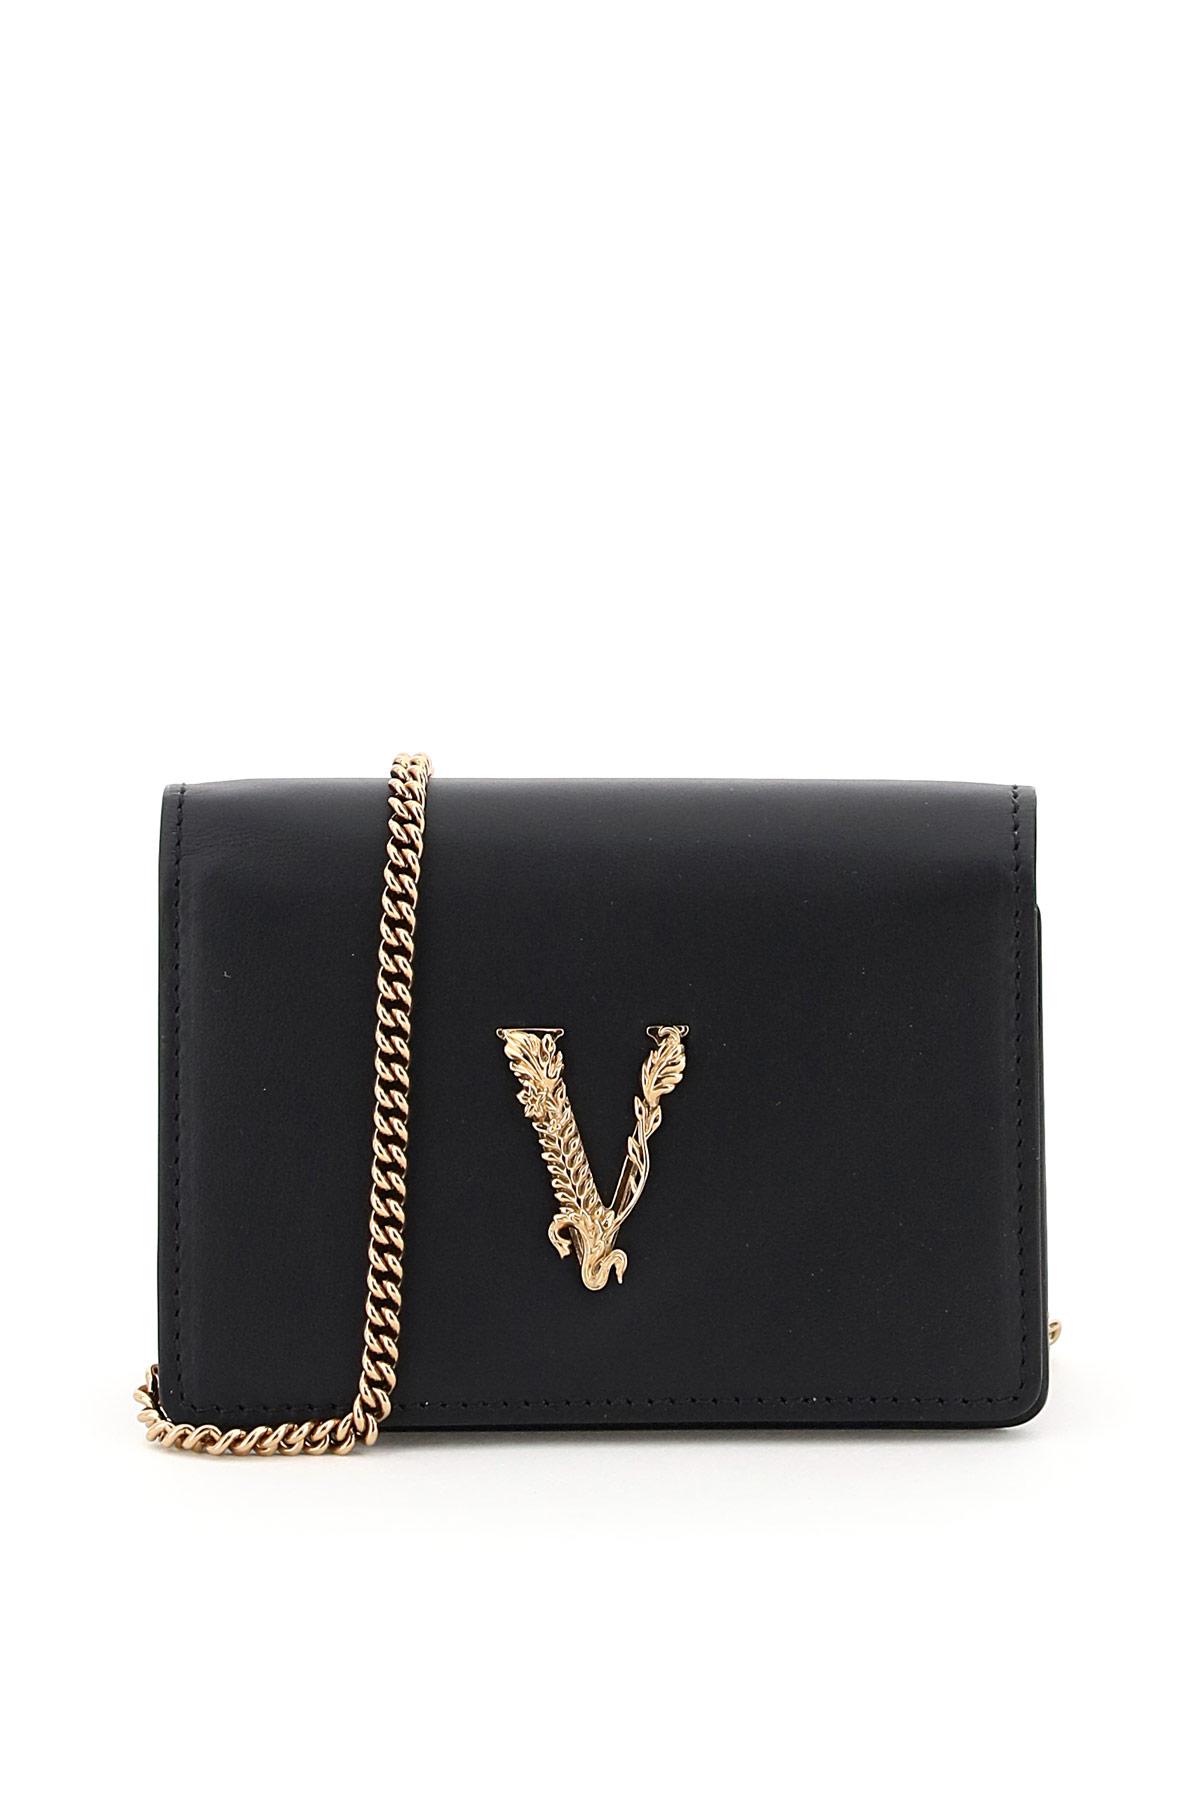 Versace Mini Virtus Chain Clutch In Leather in Black